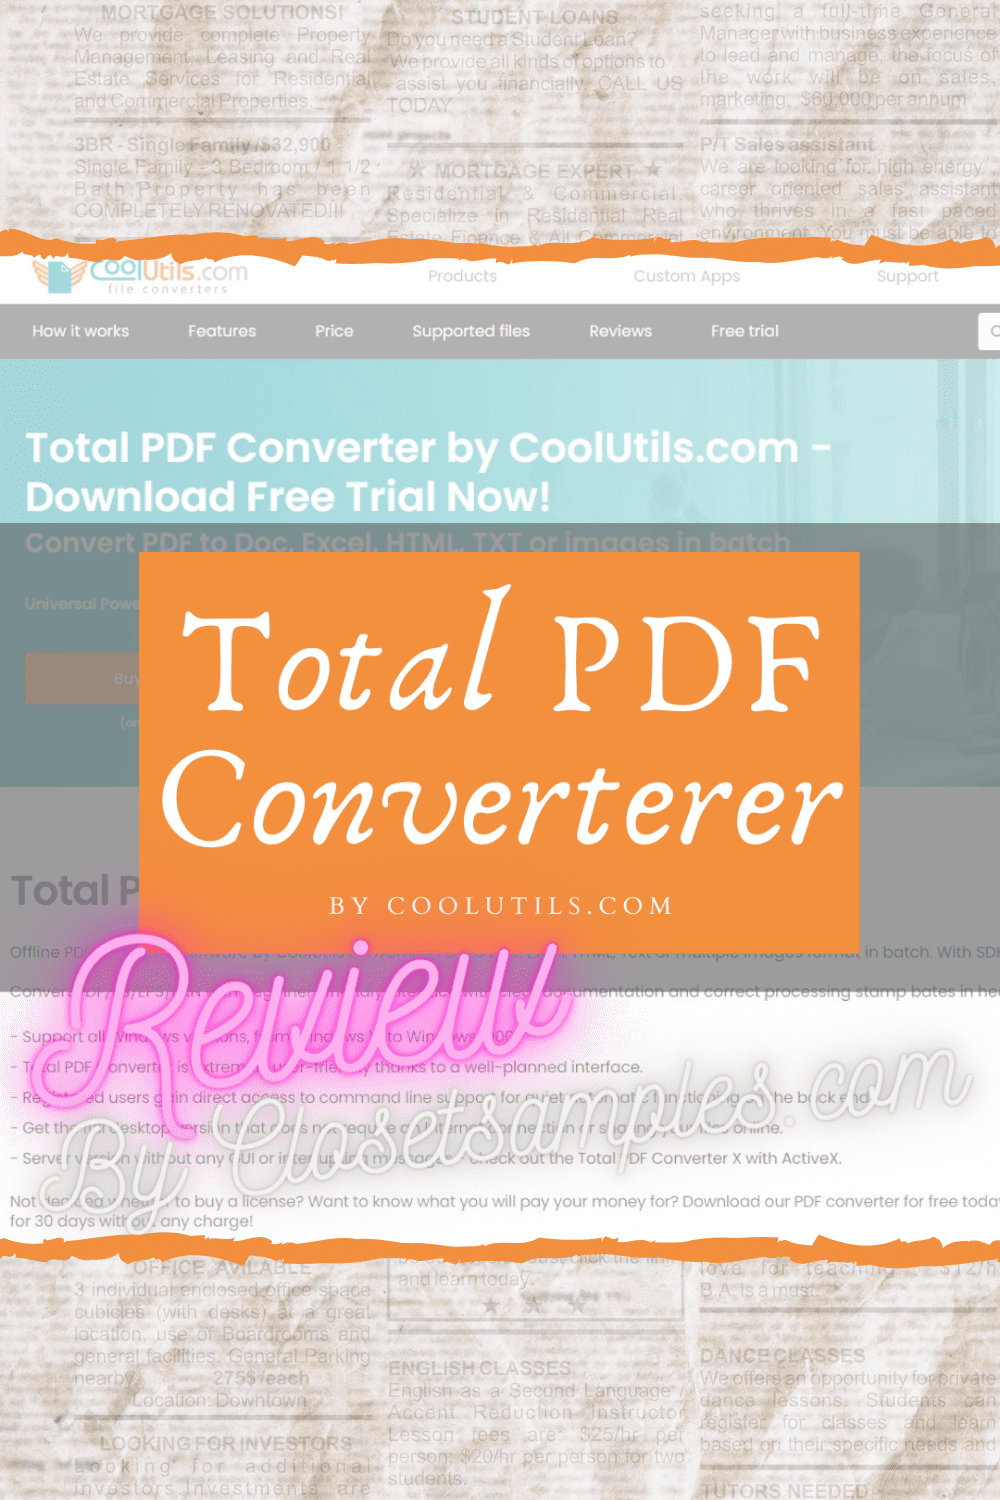 Total-PDF-Converterer-by-CoolUtils-review-closetsamples-3.png